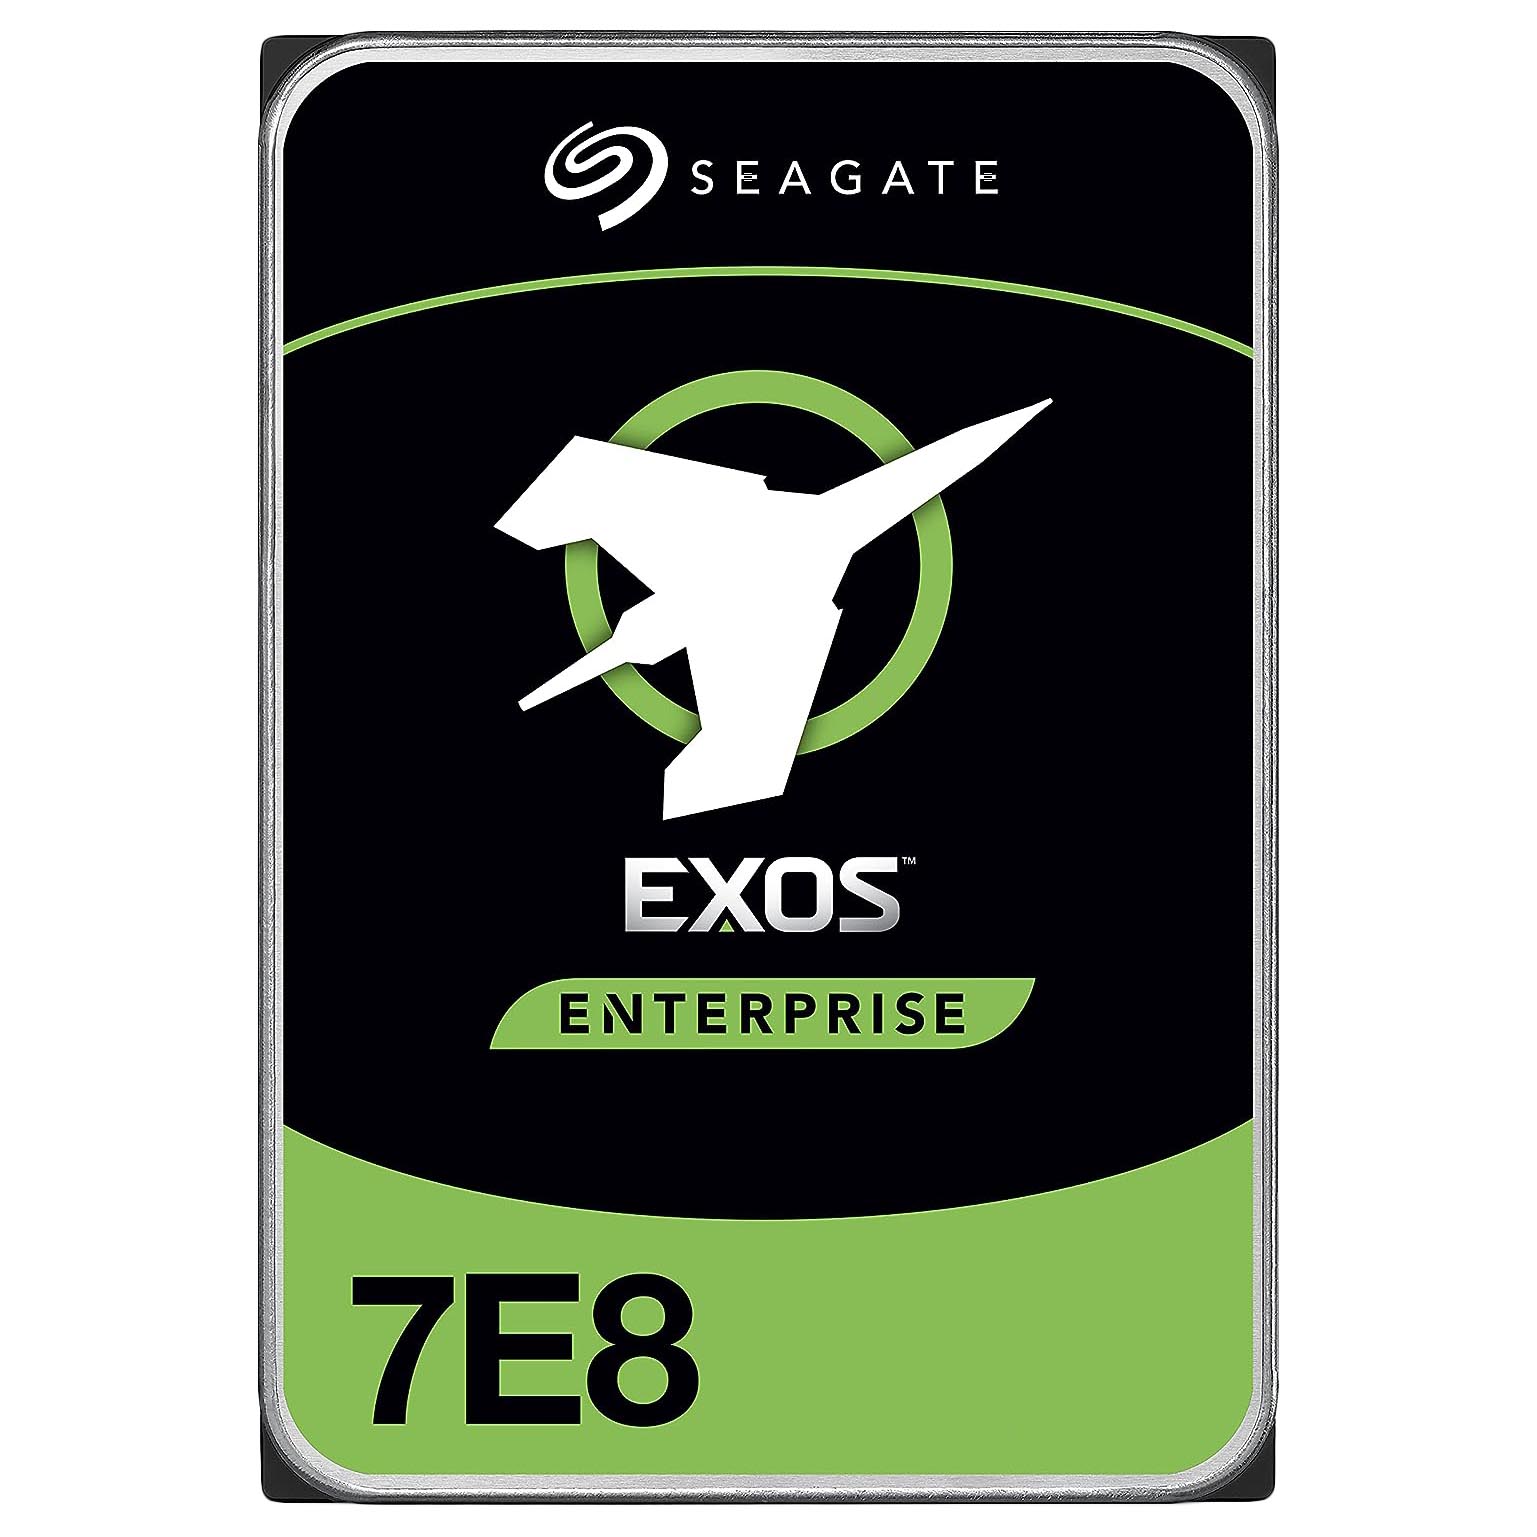 Внутренний жесткий диск Seagate Exos 7E8 512E, ST4000NM0125, 4 Тб внутренний жесткий диск seagate exos 7e8 512n st2000nm0055 2 тб